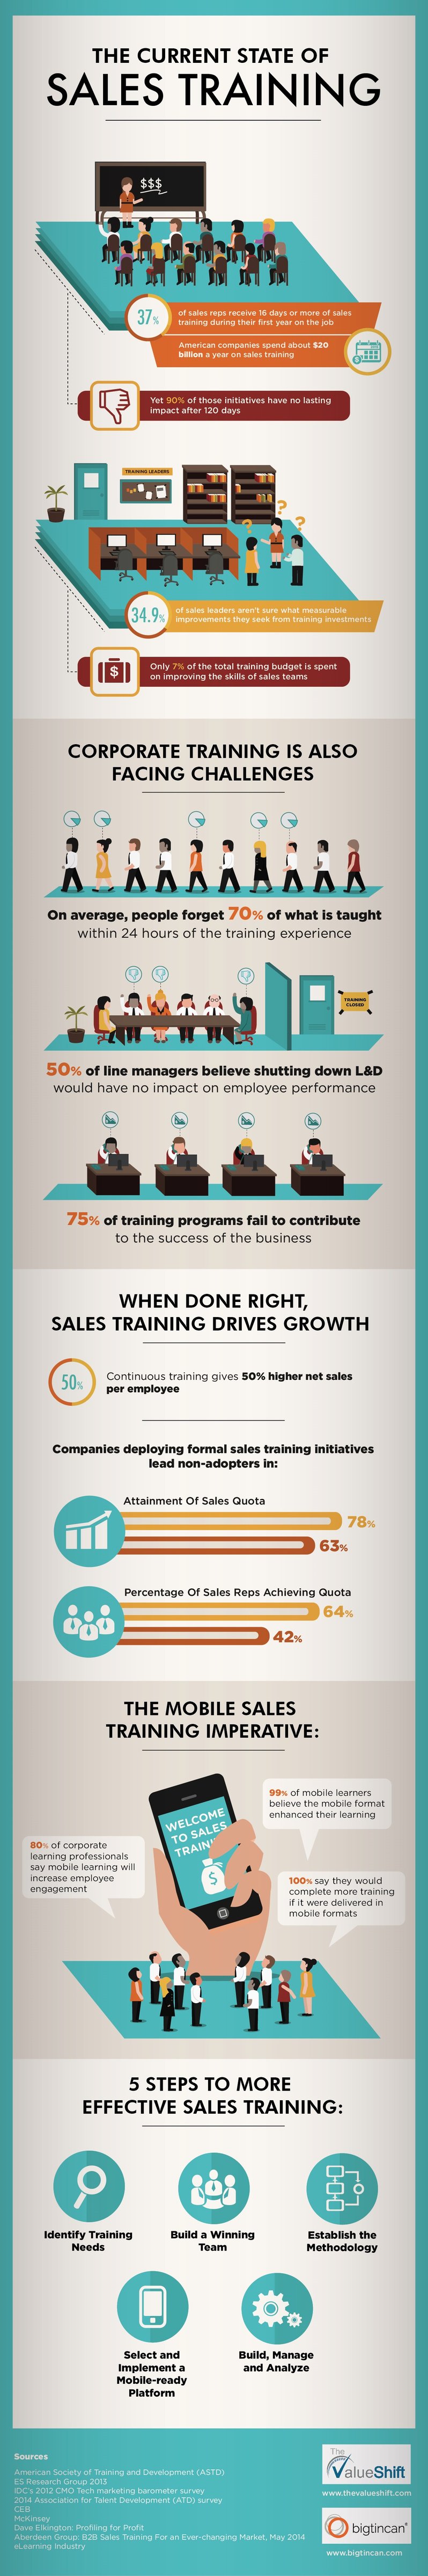 bigtincan-Infographic-State-of-Sales-Training-4-15.jpg